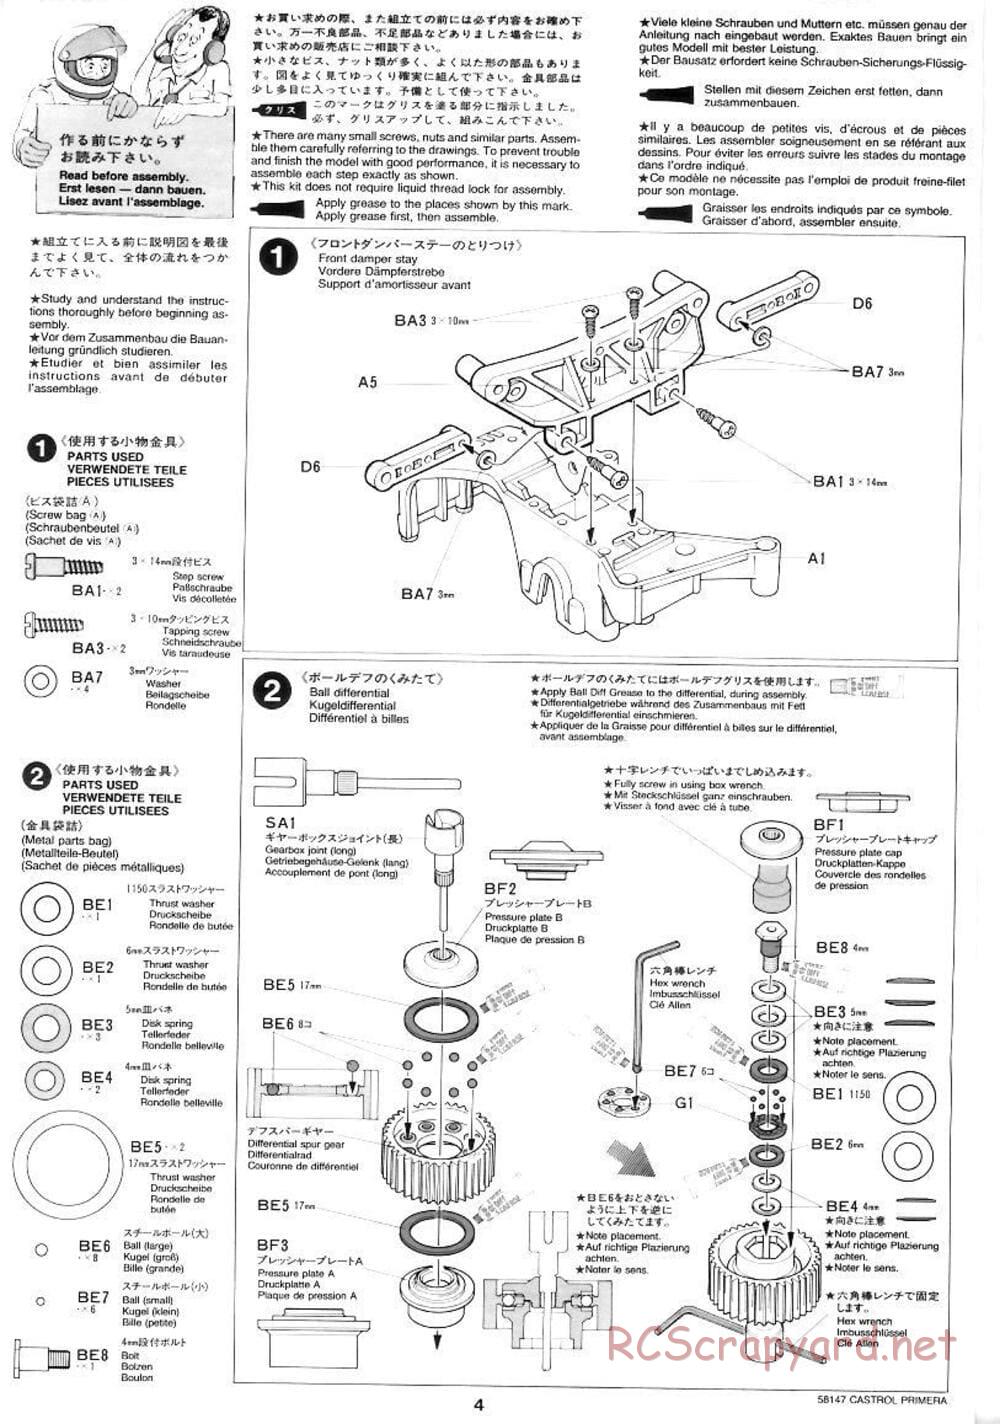 Tamiya - Castrol Nissan Primera JTCC - FF-01 Chassis - Manual - Page 4